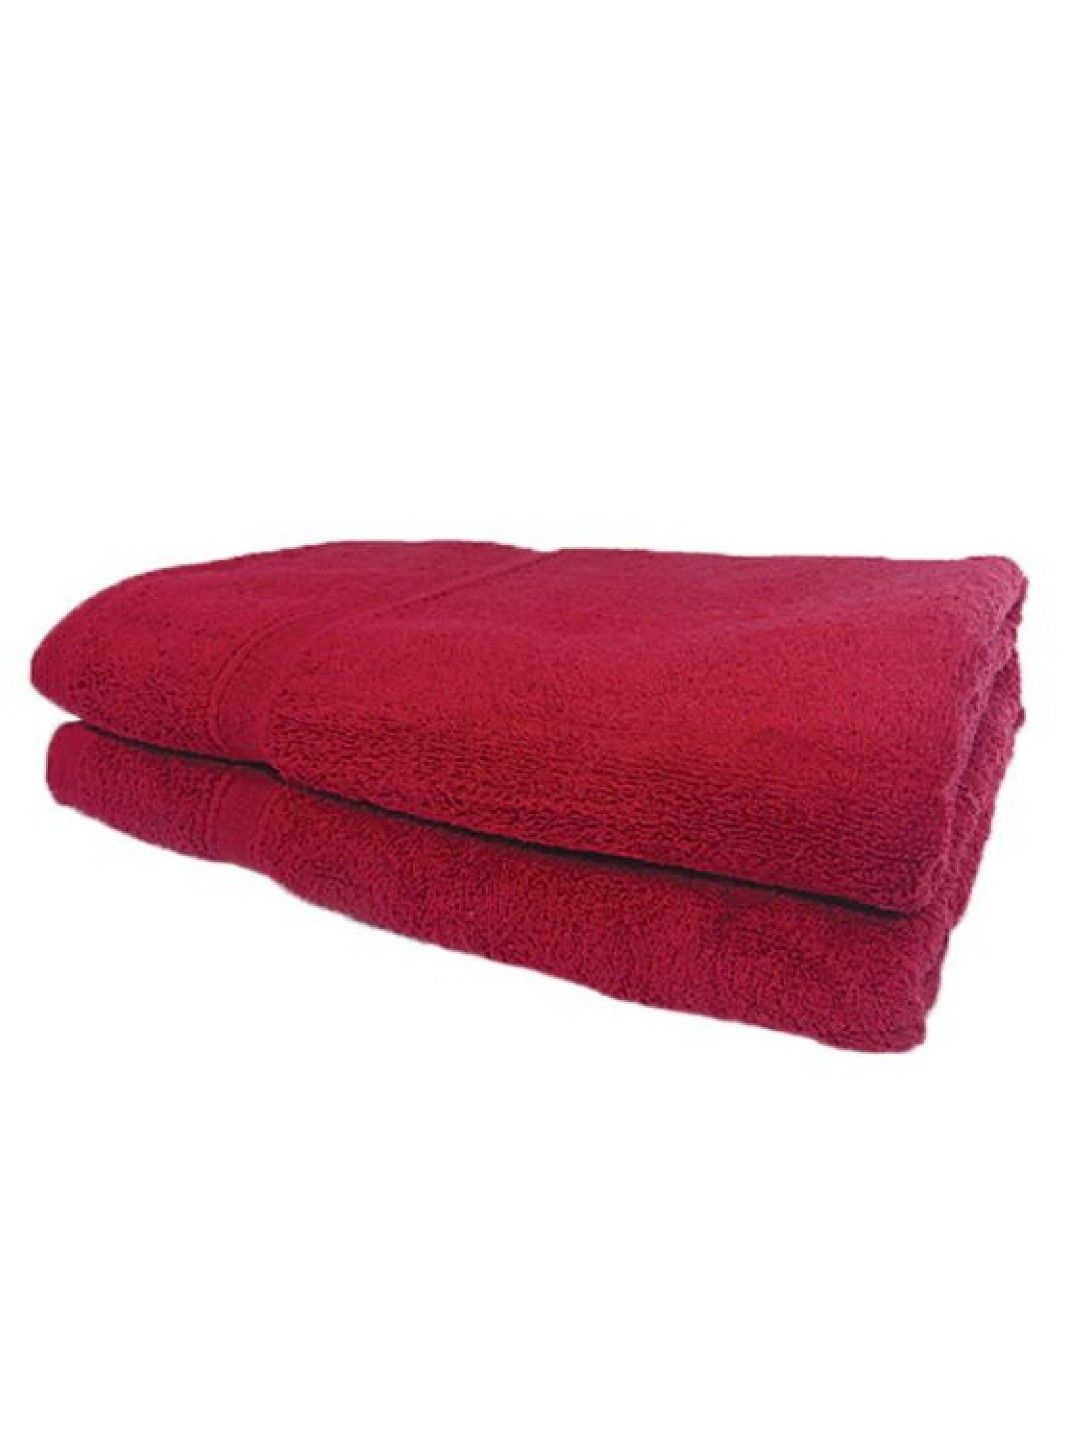 Lifestyle by Canadian Series 1111 USA Cotton Towel - Big Bath